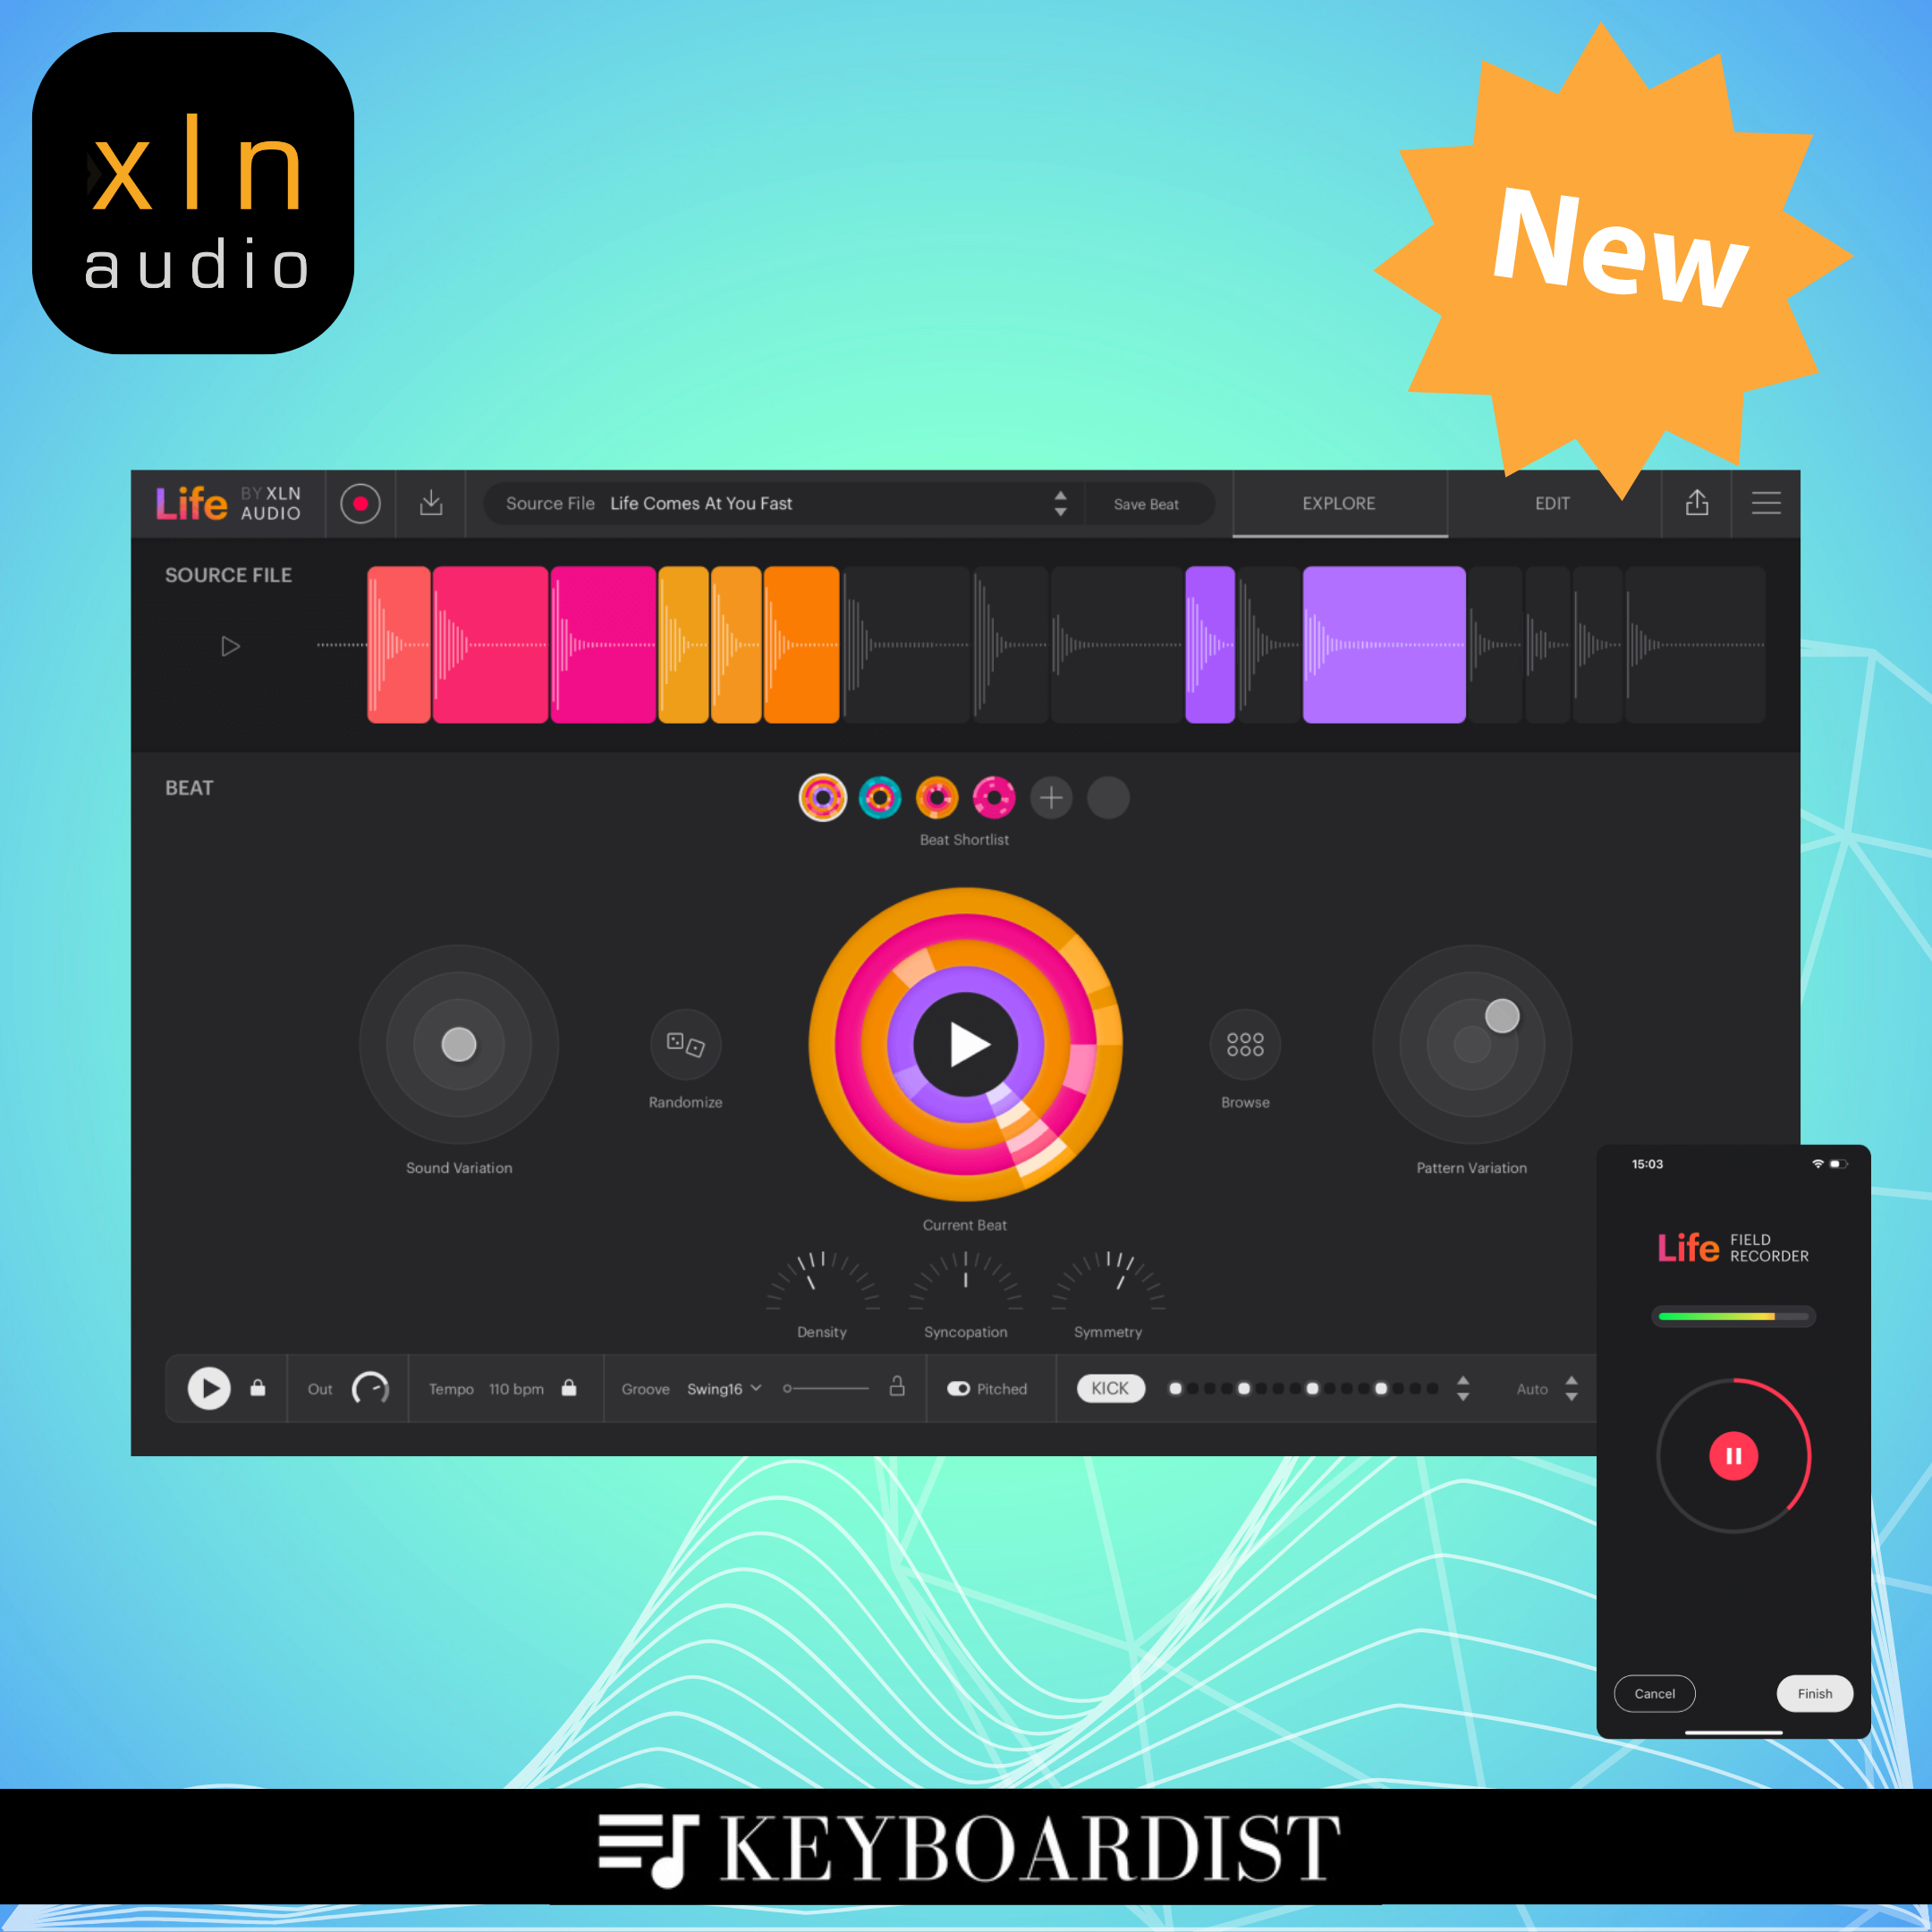 Keyboardist - New - XLN Audio Life